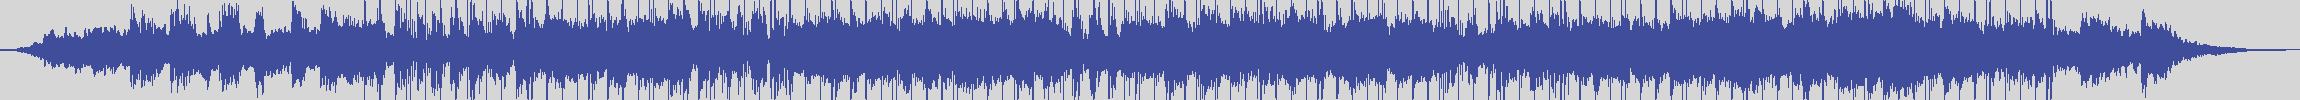 upr [UPR082] Alice Botté - Hamburger Lady [Original Mix] audio wave form